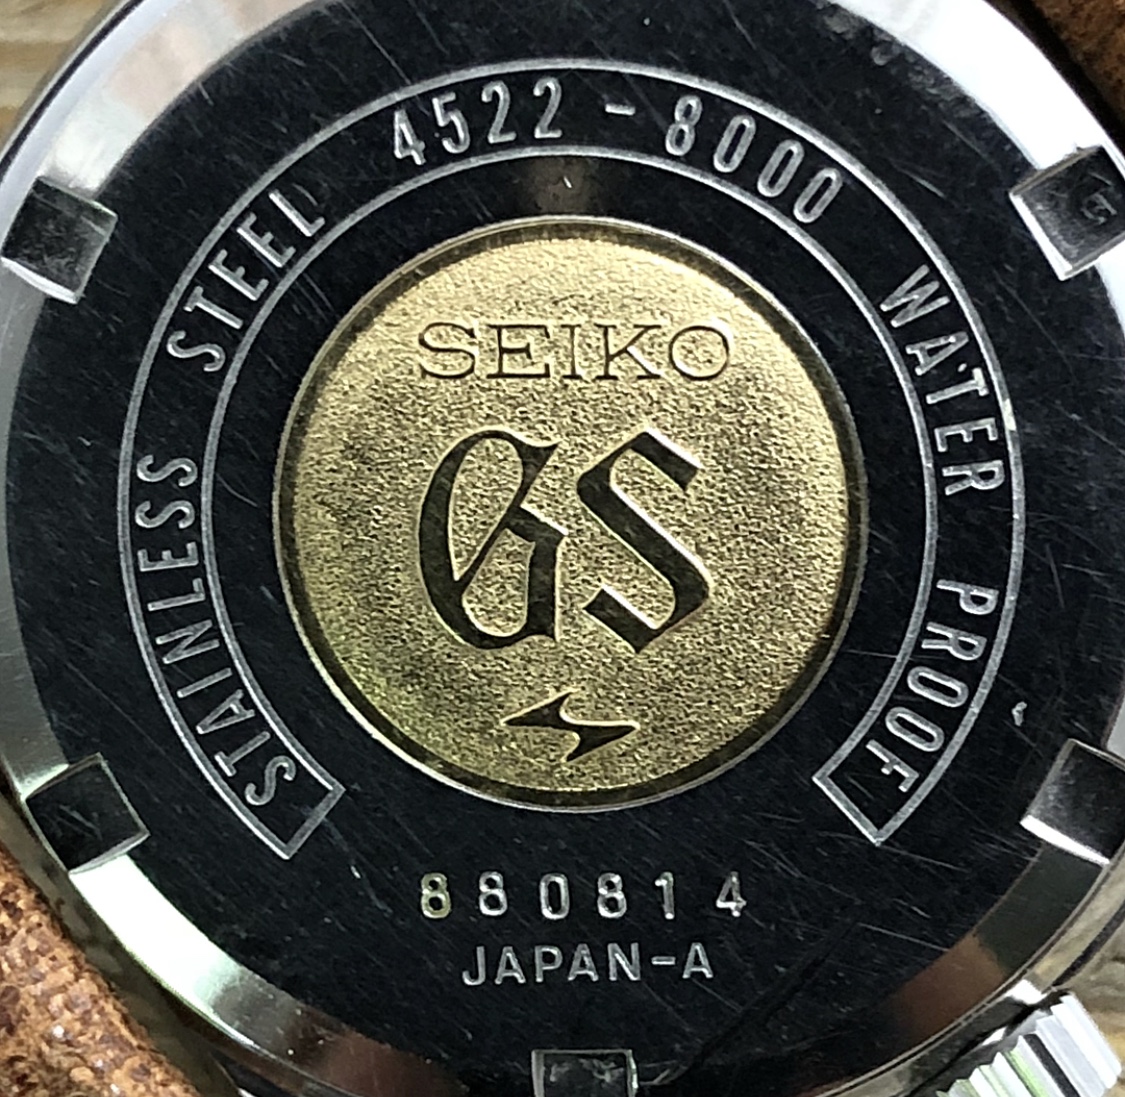 Seiko Gs 4522 Hot Sale, SAVE 52% 